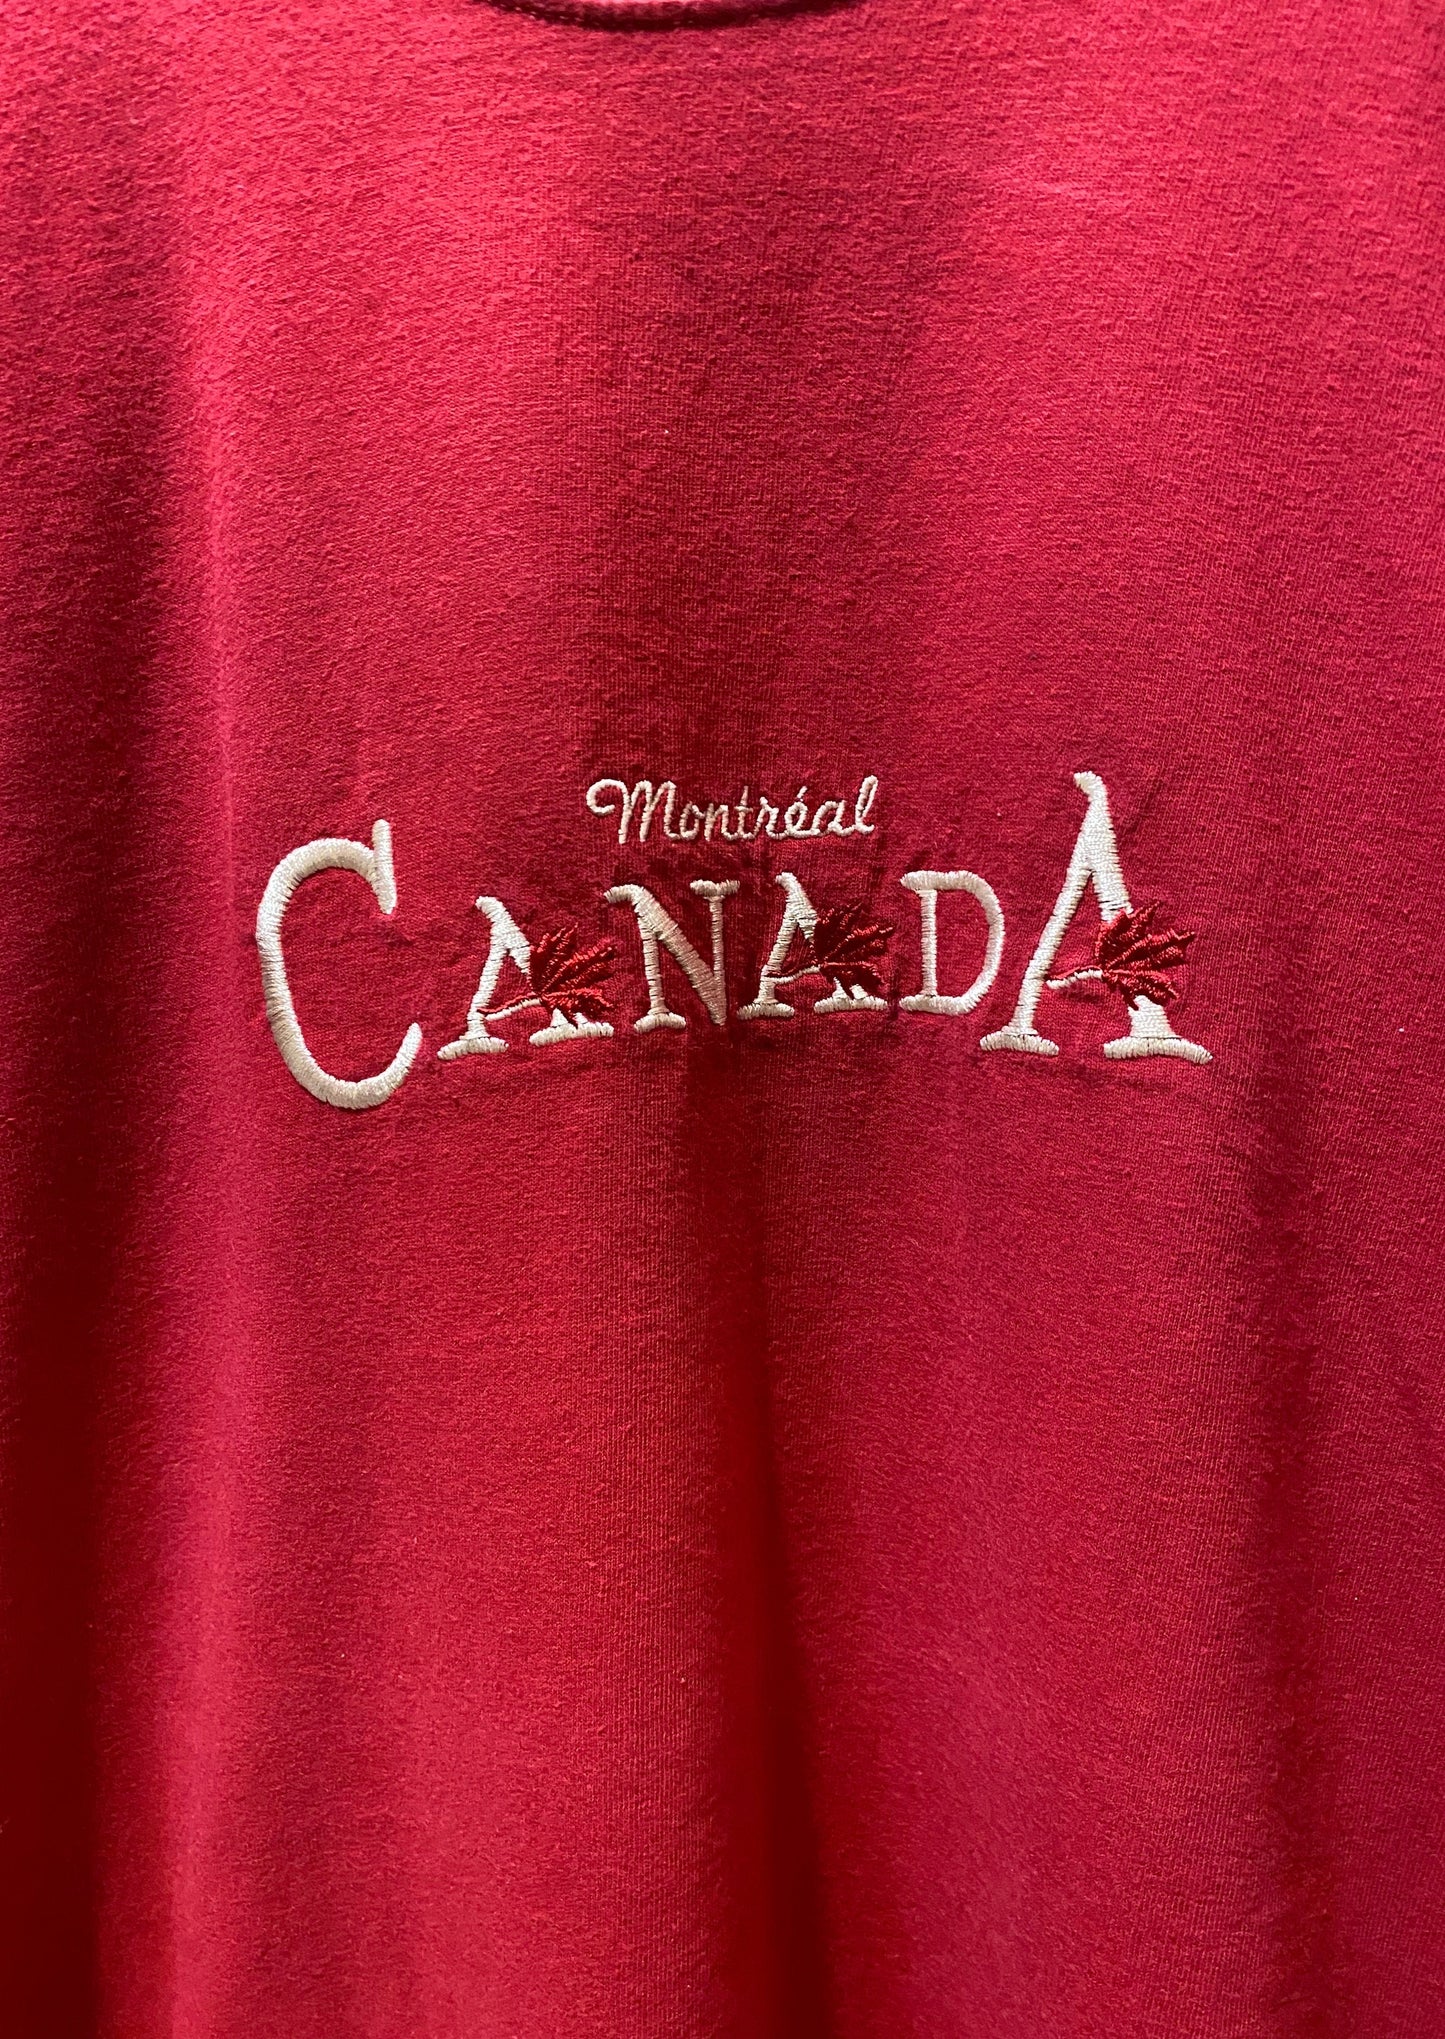 Montreal Canada territory T-Shirt (XL)